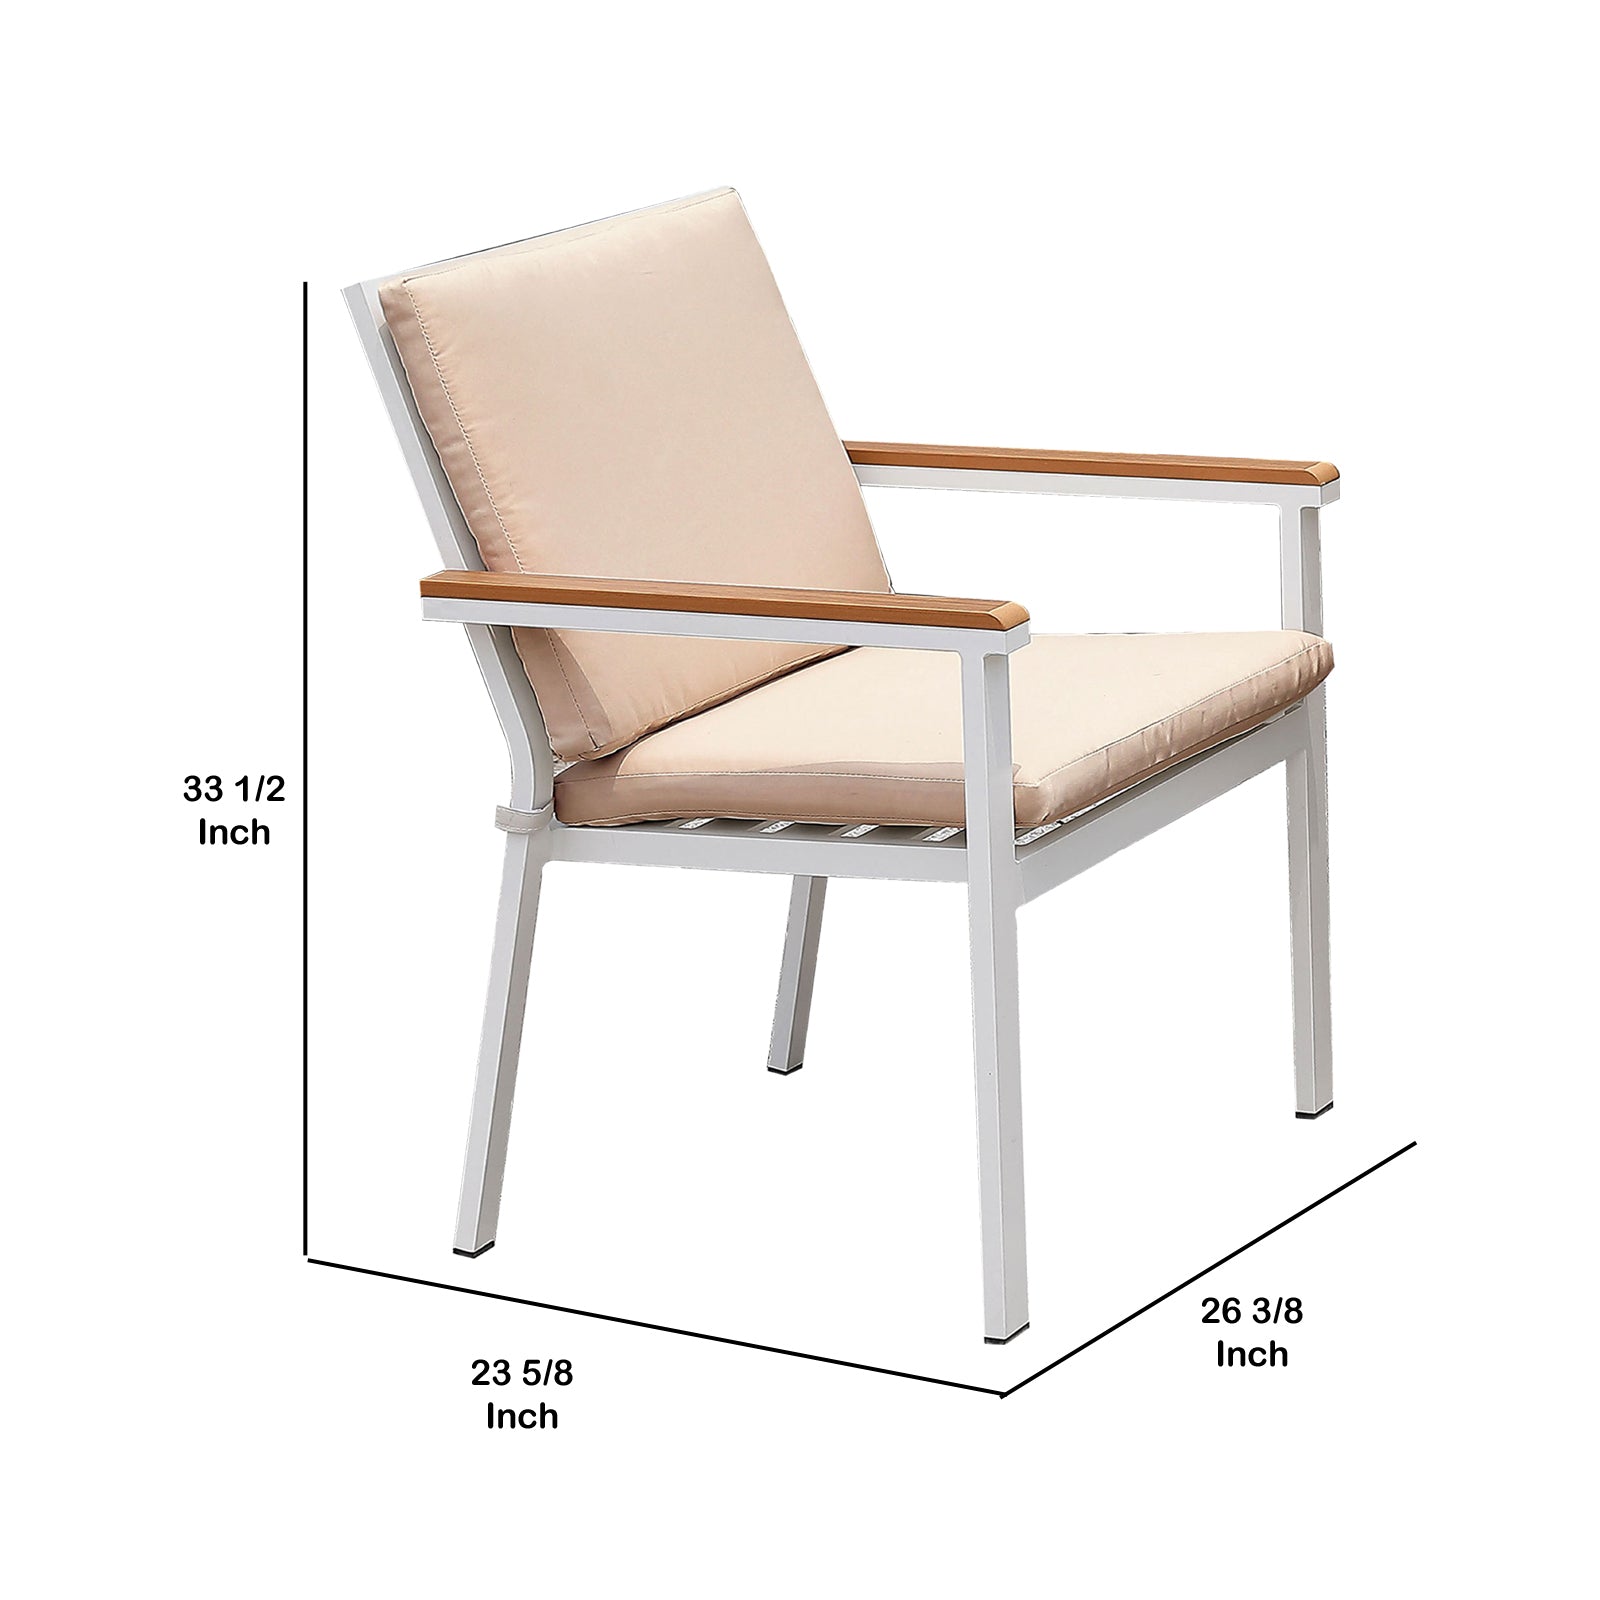 27 Inch Aluminum Frame Arm Chair, Outdoor,